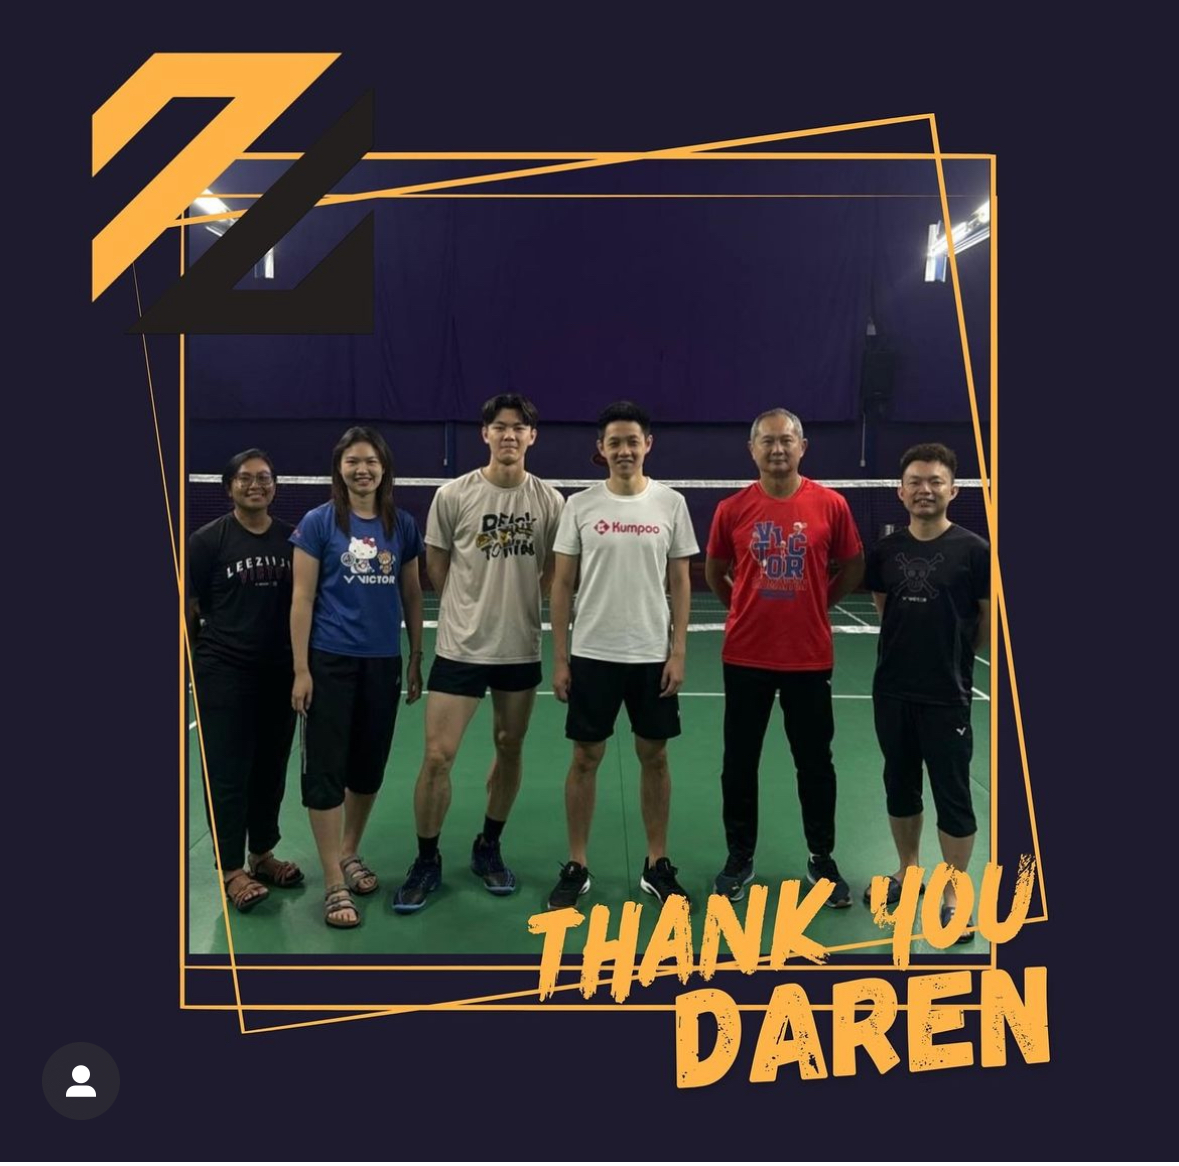 Team lzj says thank you to coach daren